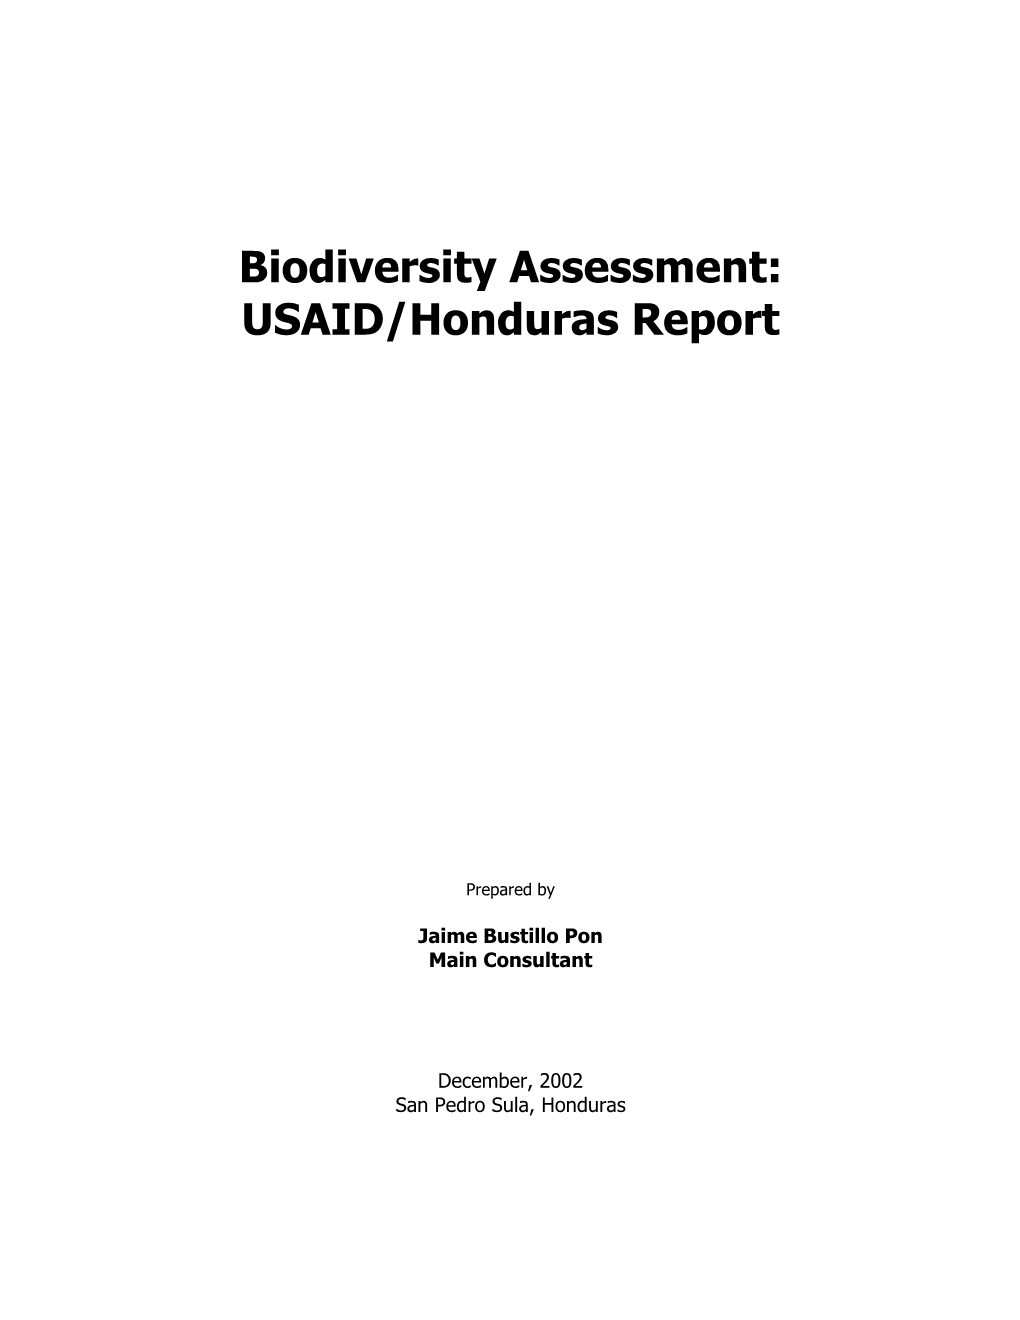 USAID/Honduras Report